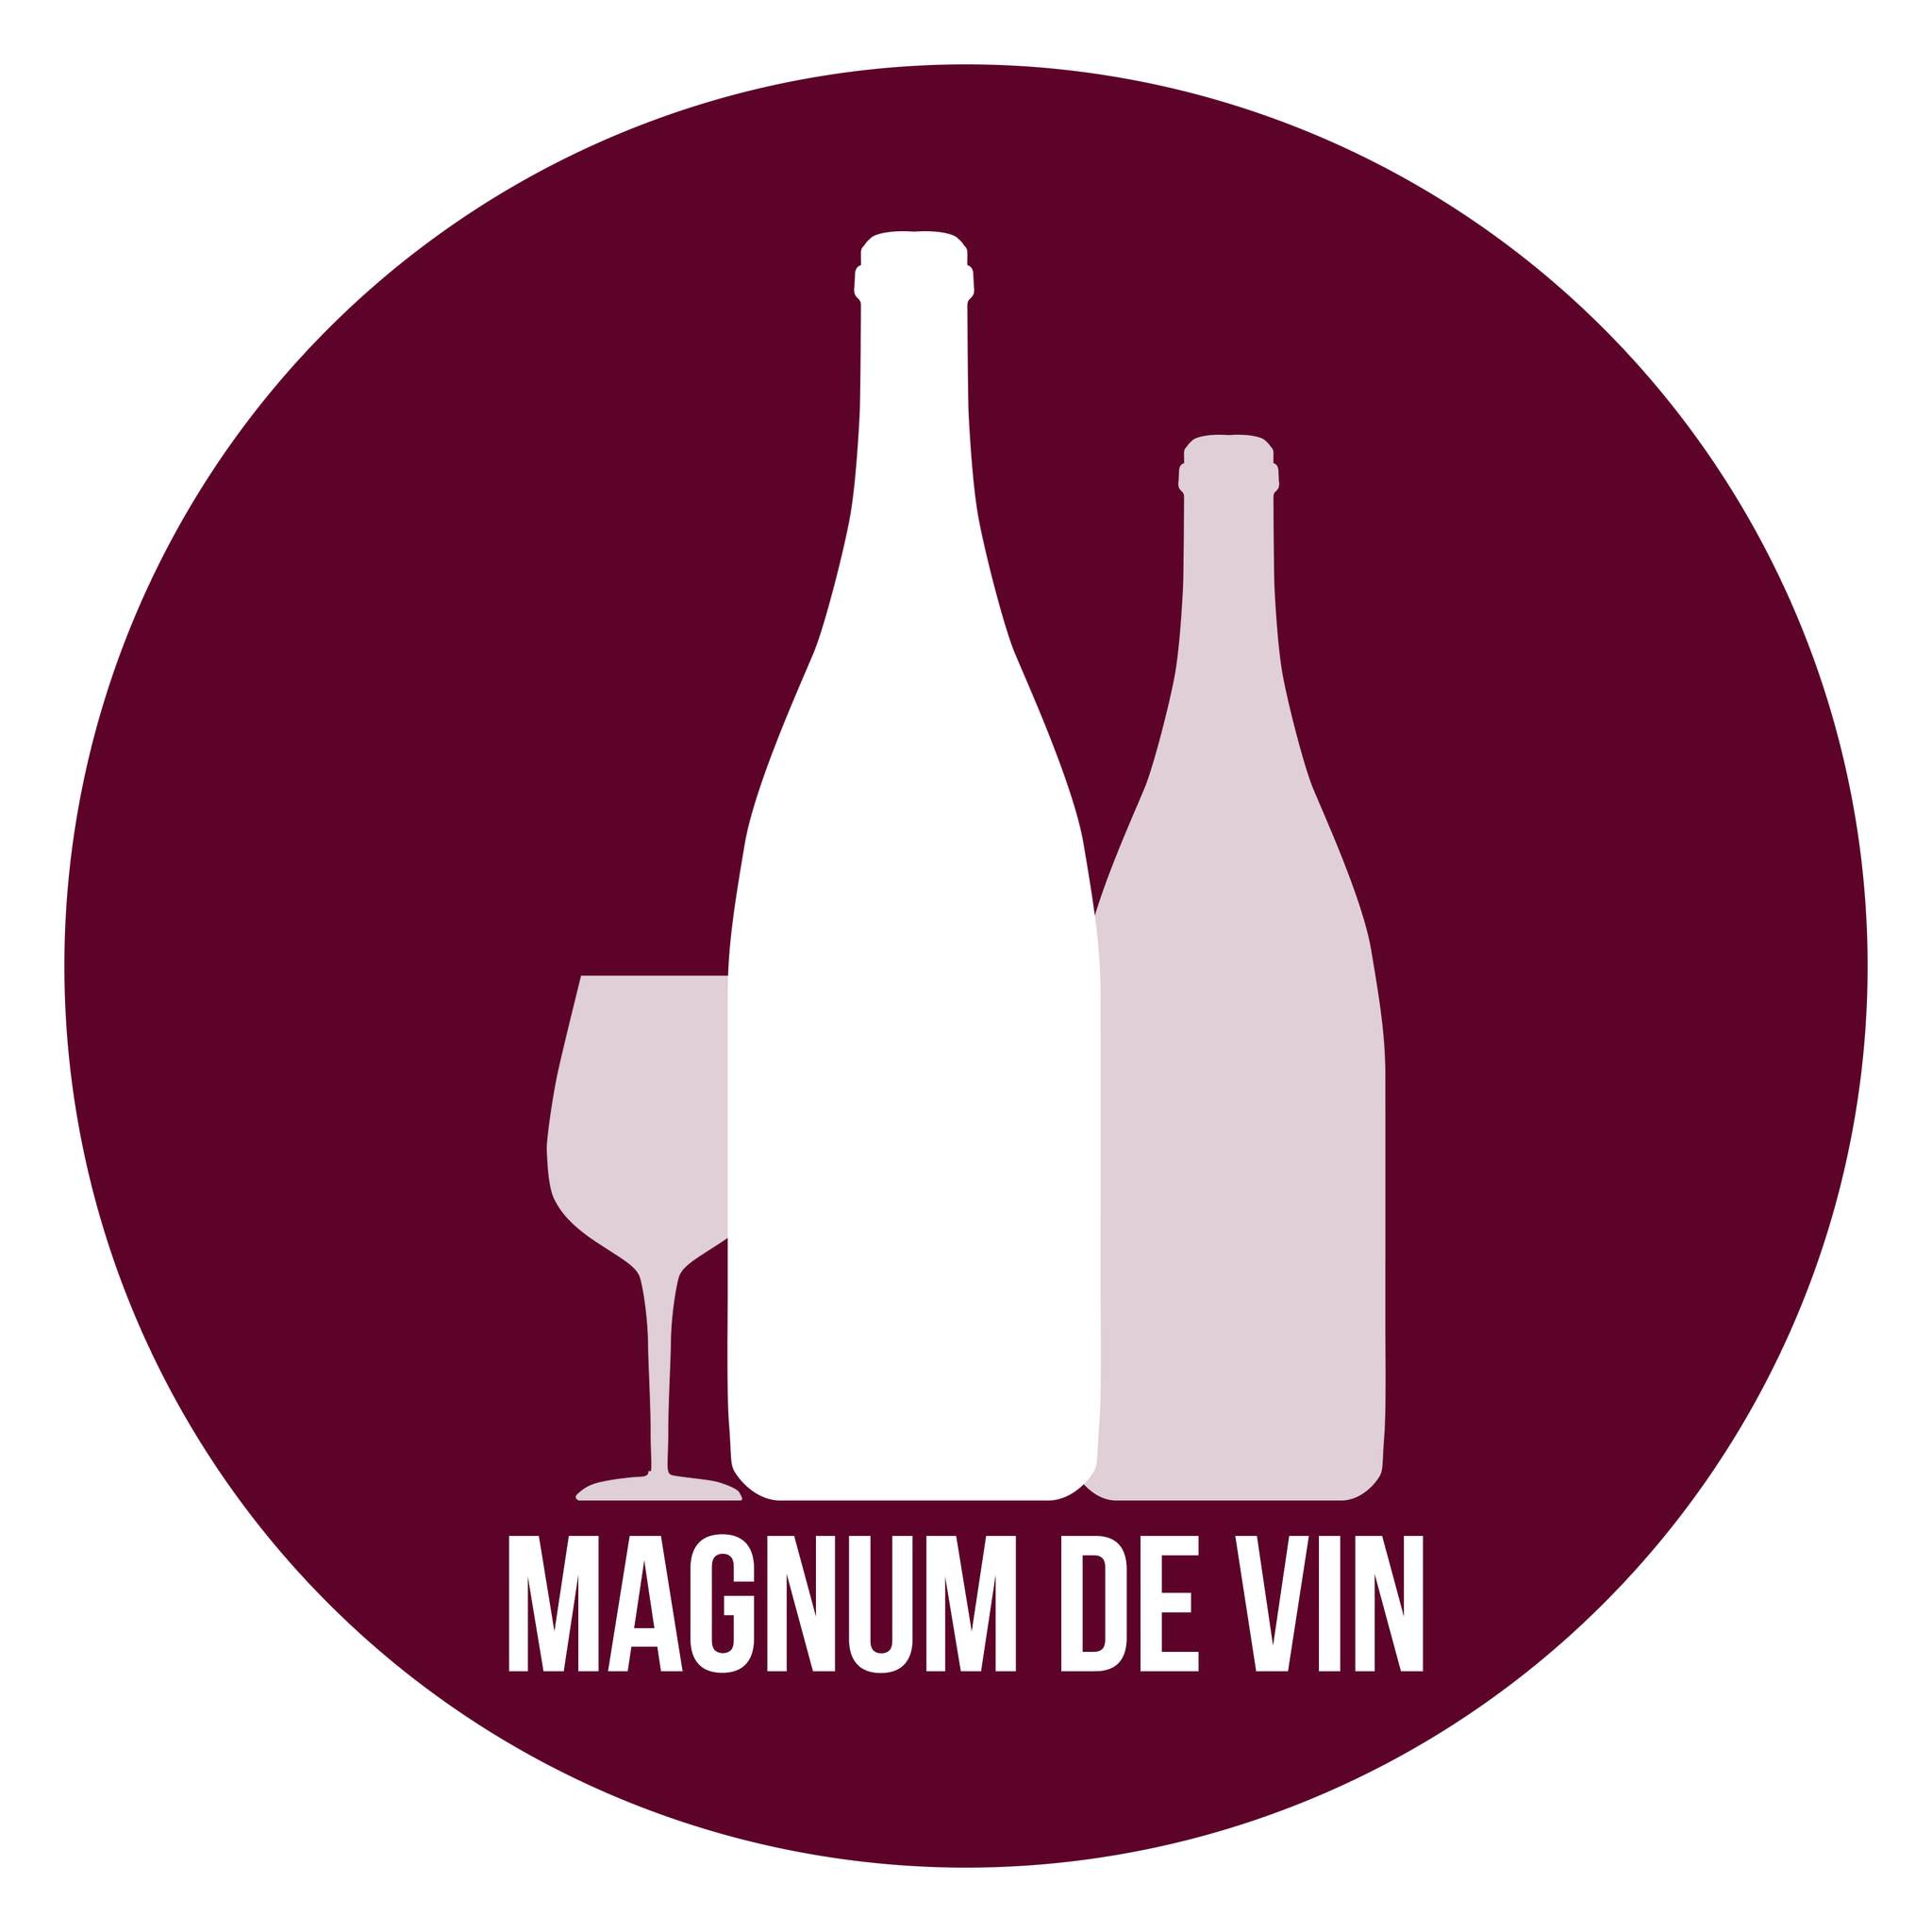 Magnum de vin logo